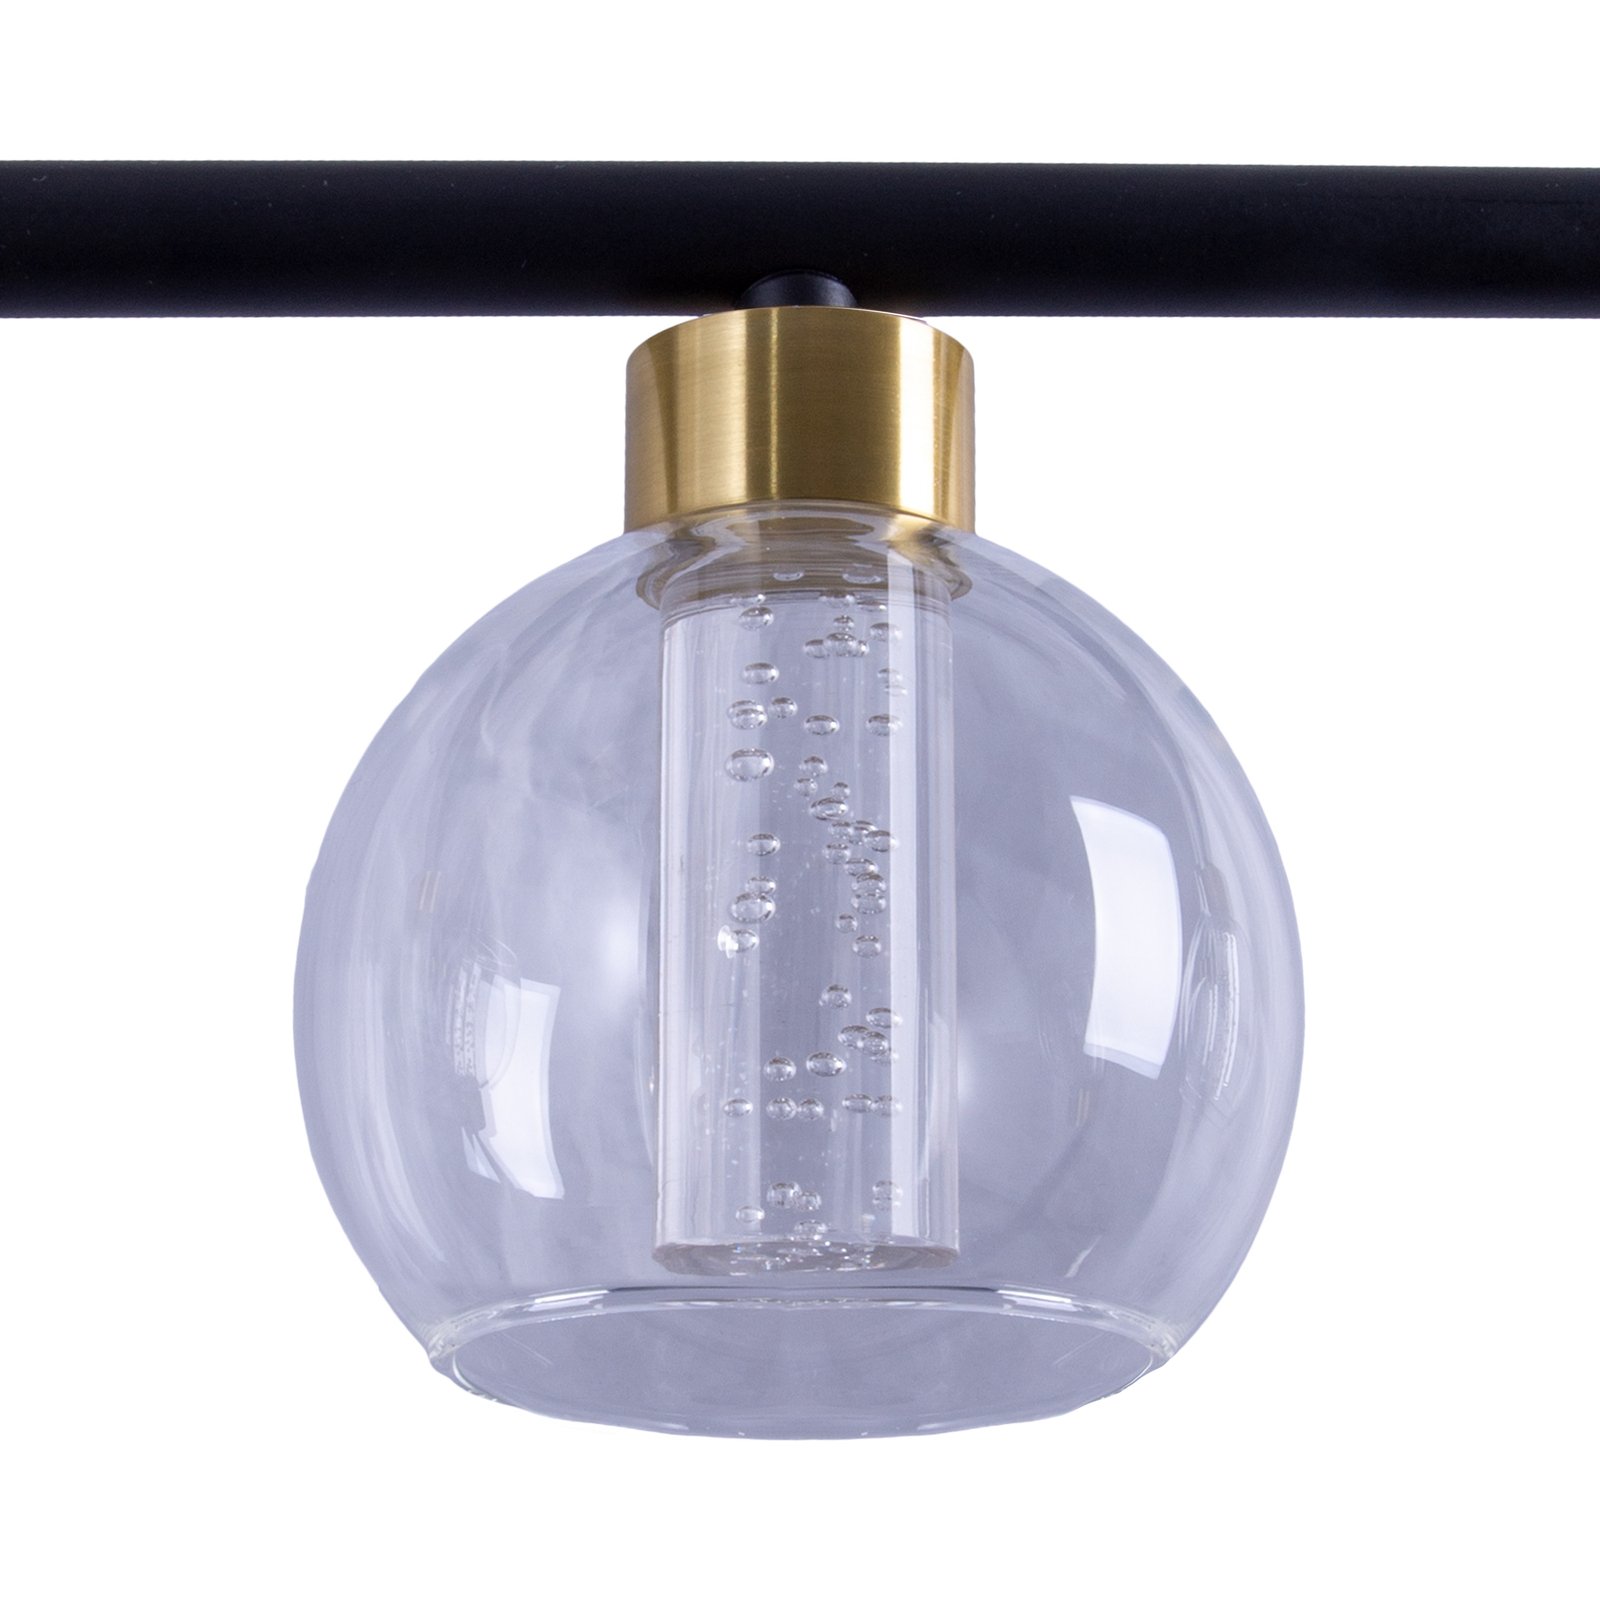 LED hanglamp Brass 5-lamps verstelbaar